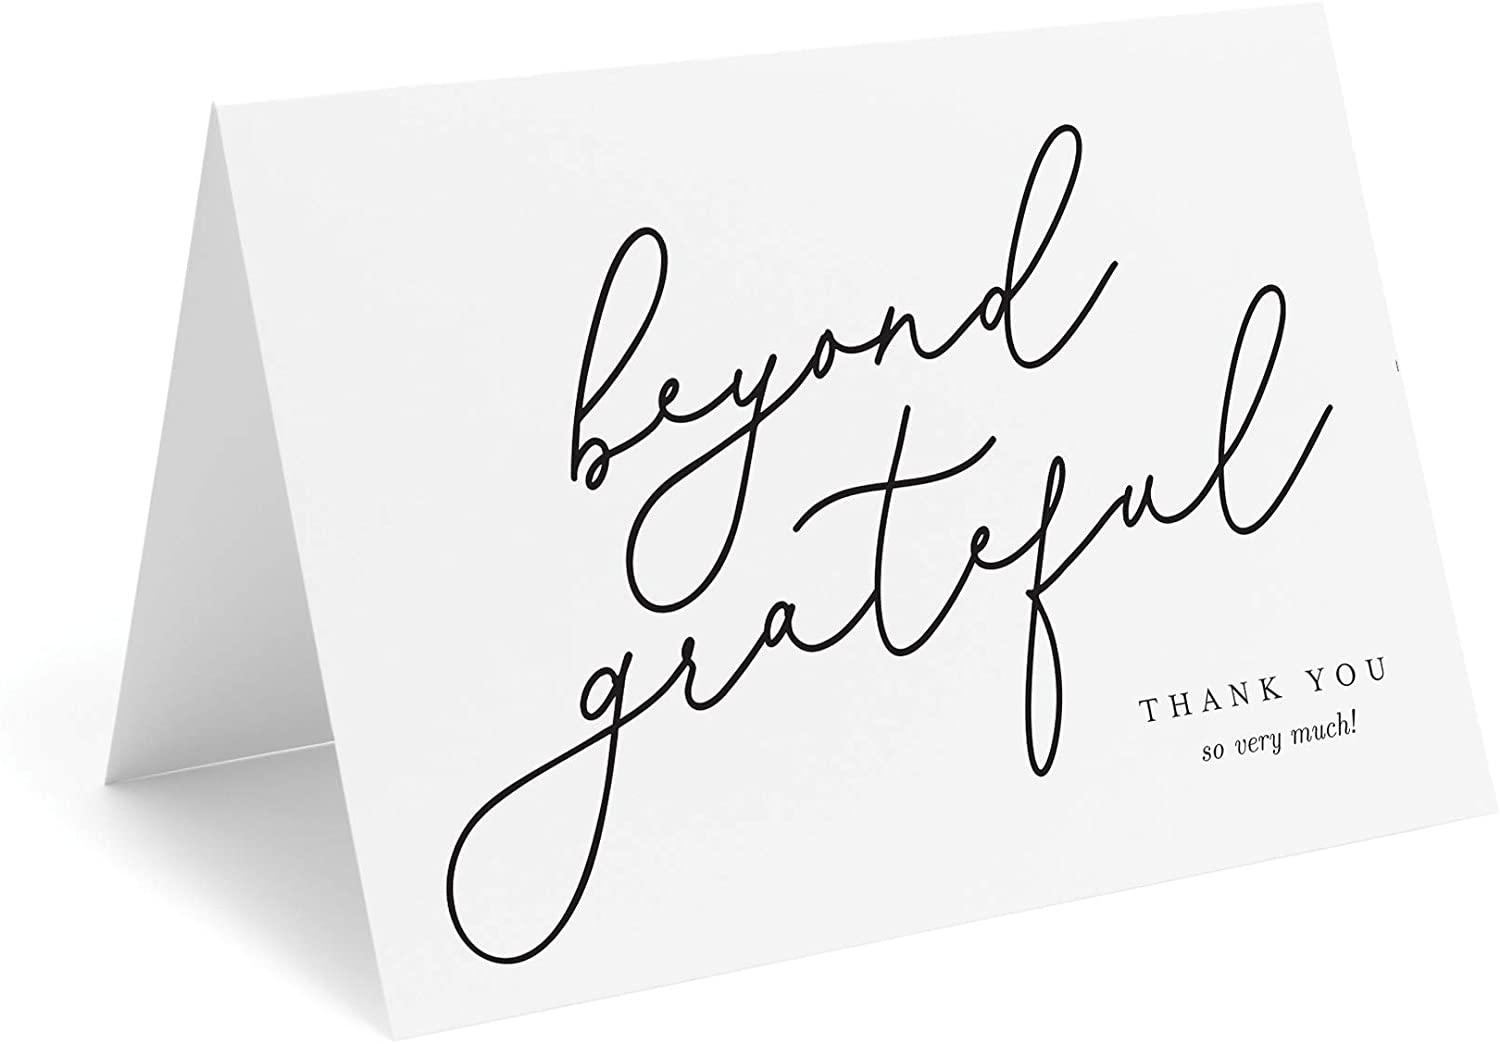 beyond grateful card